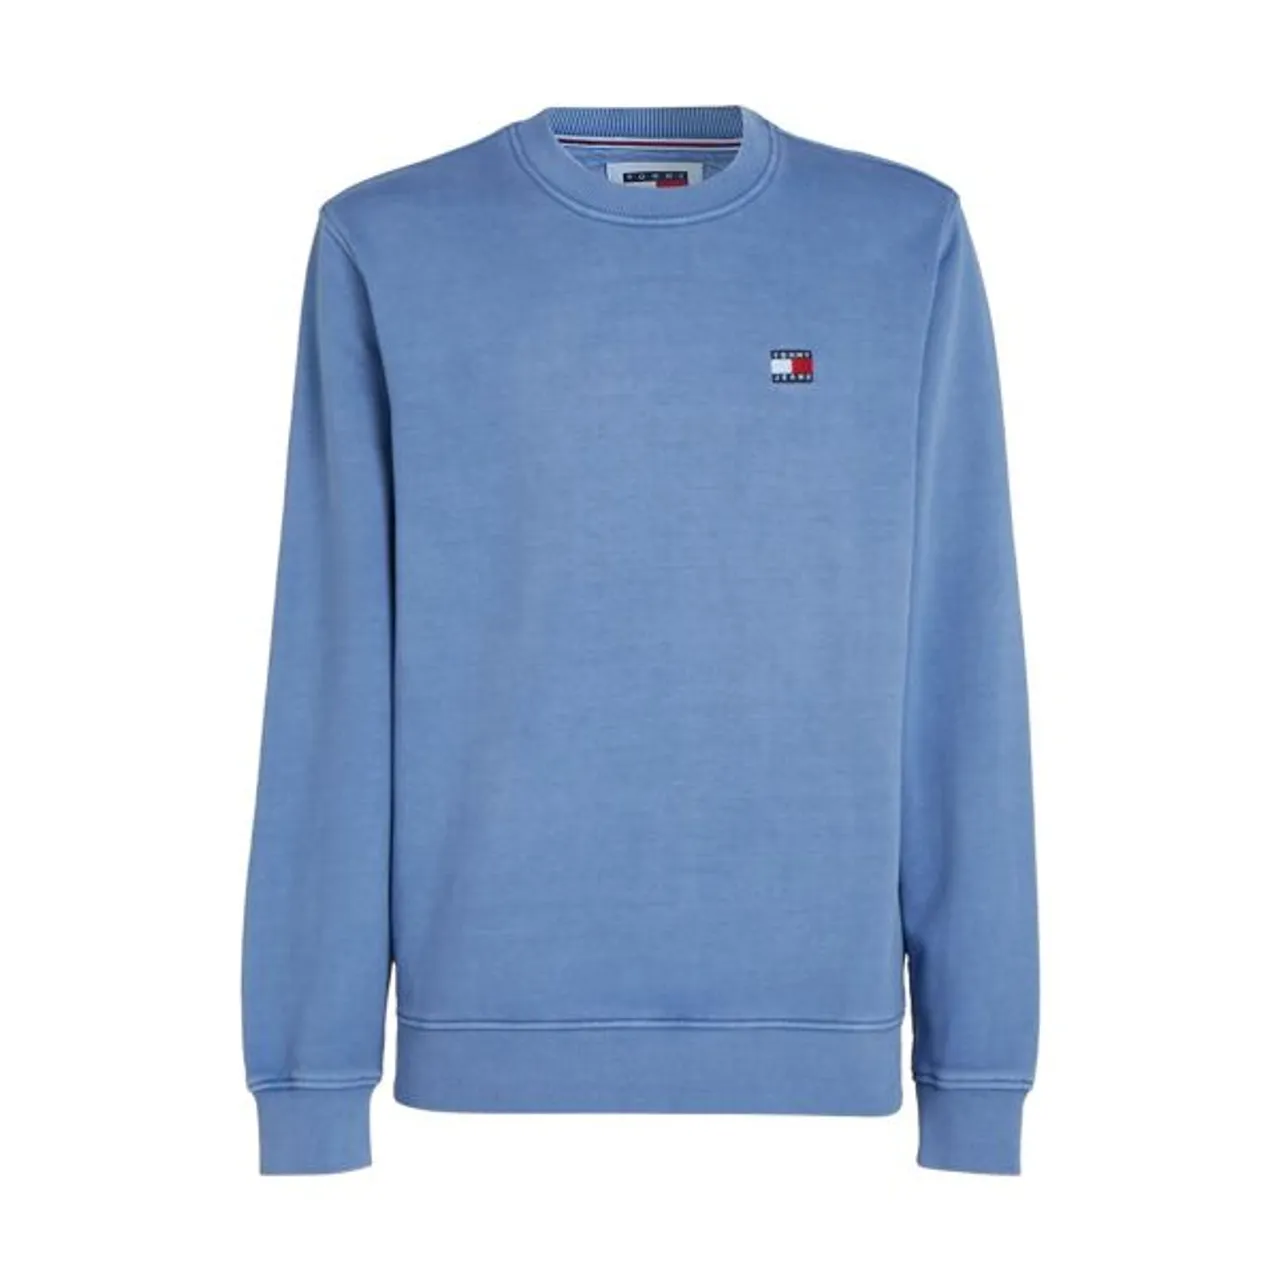 Sweatshirt TOMMY JEANS "TJM REG WASHED BADGE CREW" Gr. L, blau (charmed) Herren Sweatshirts